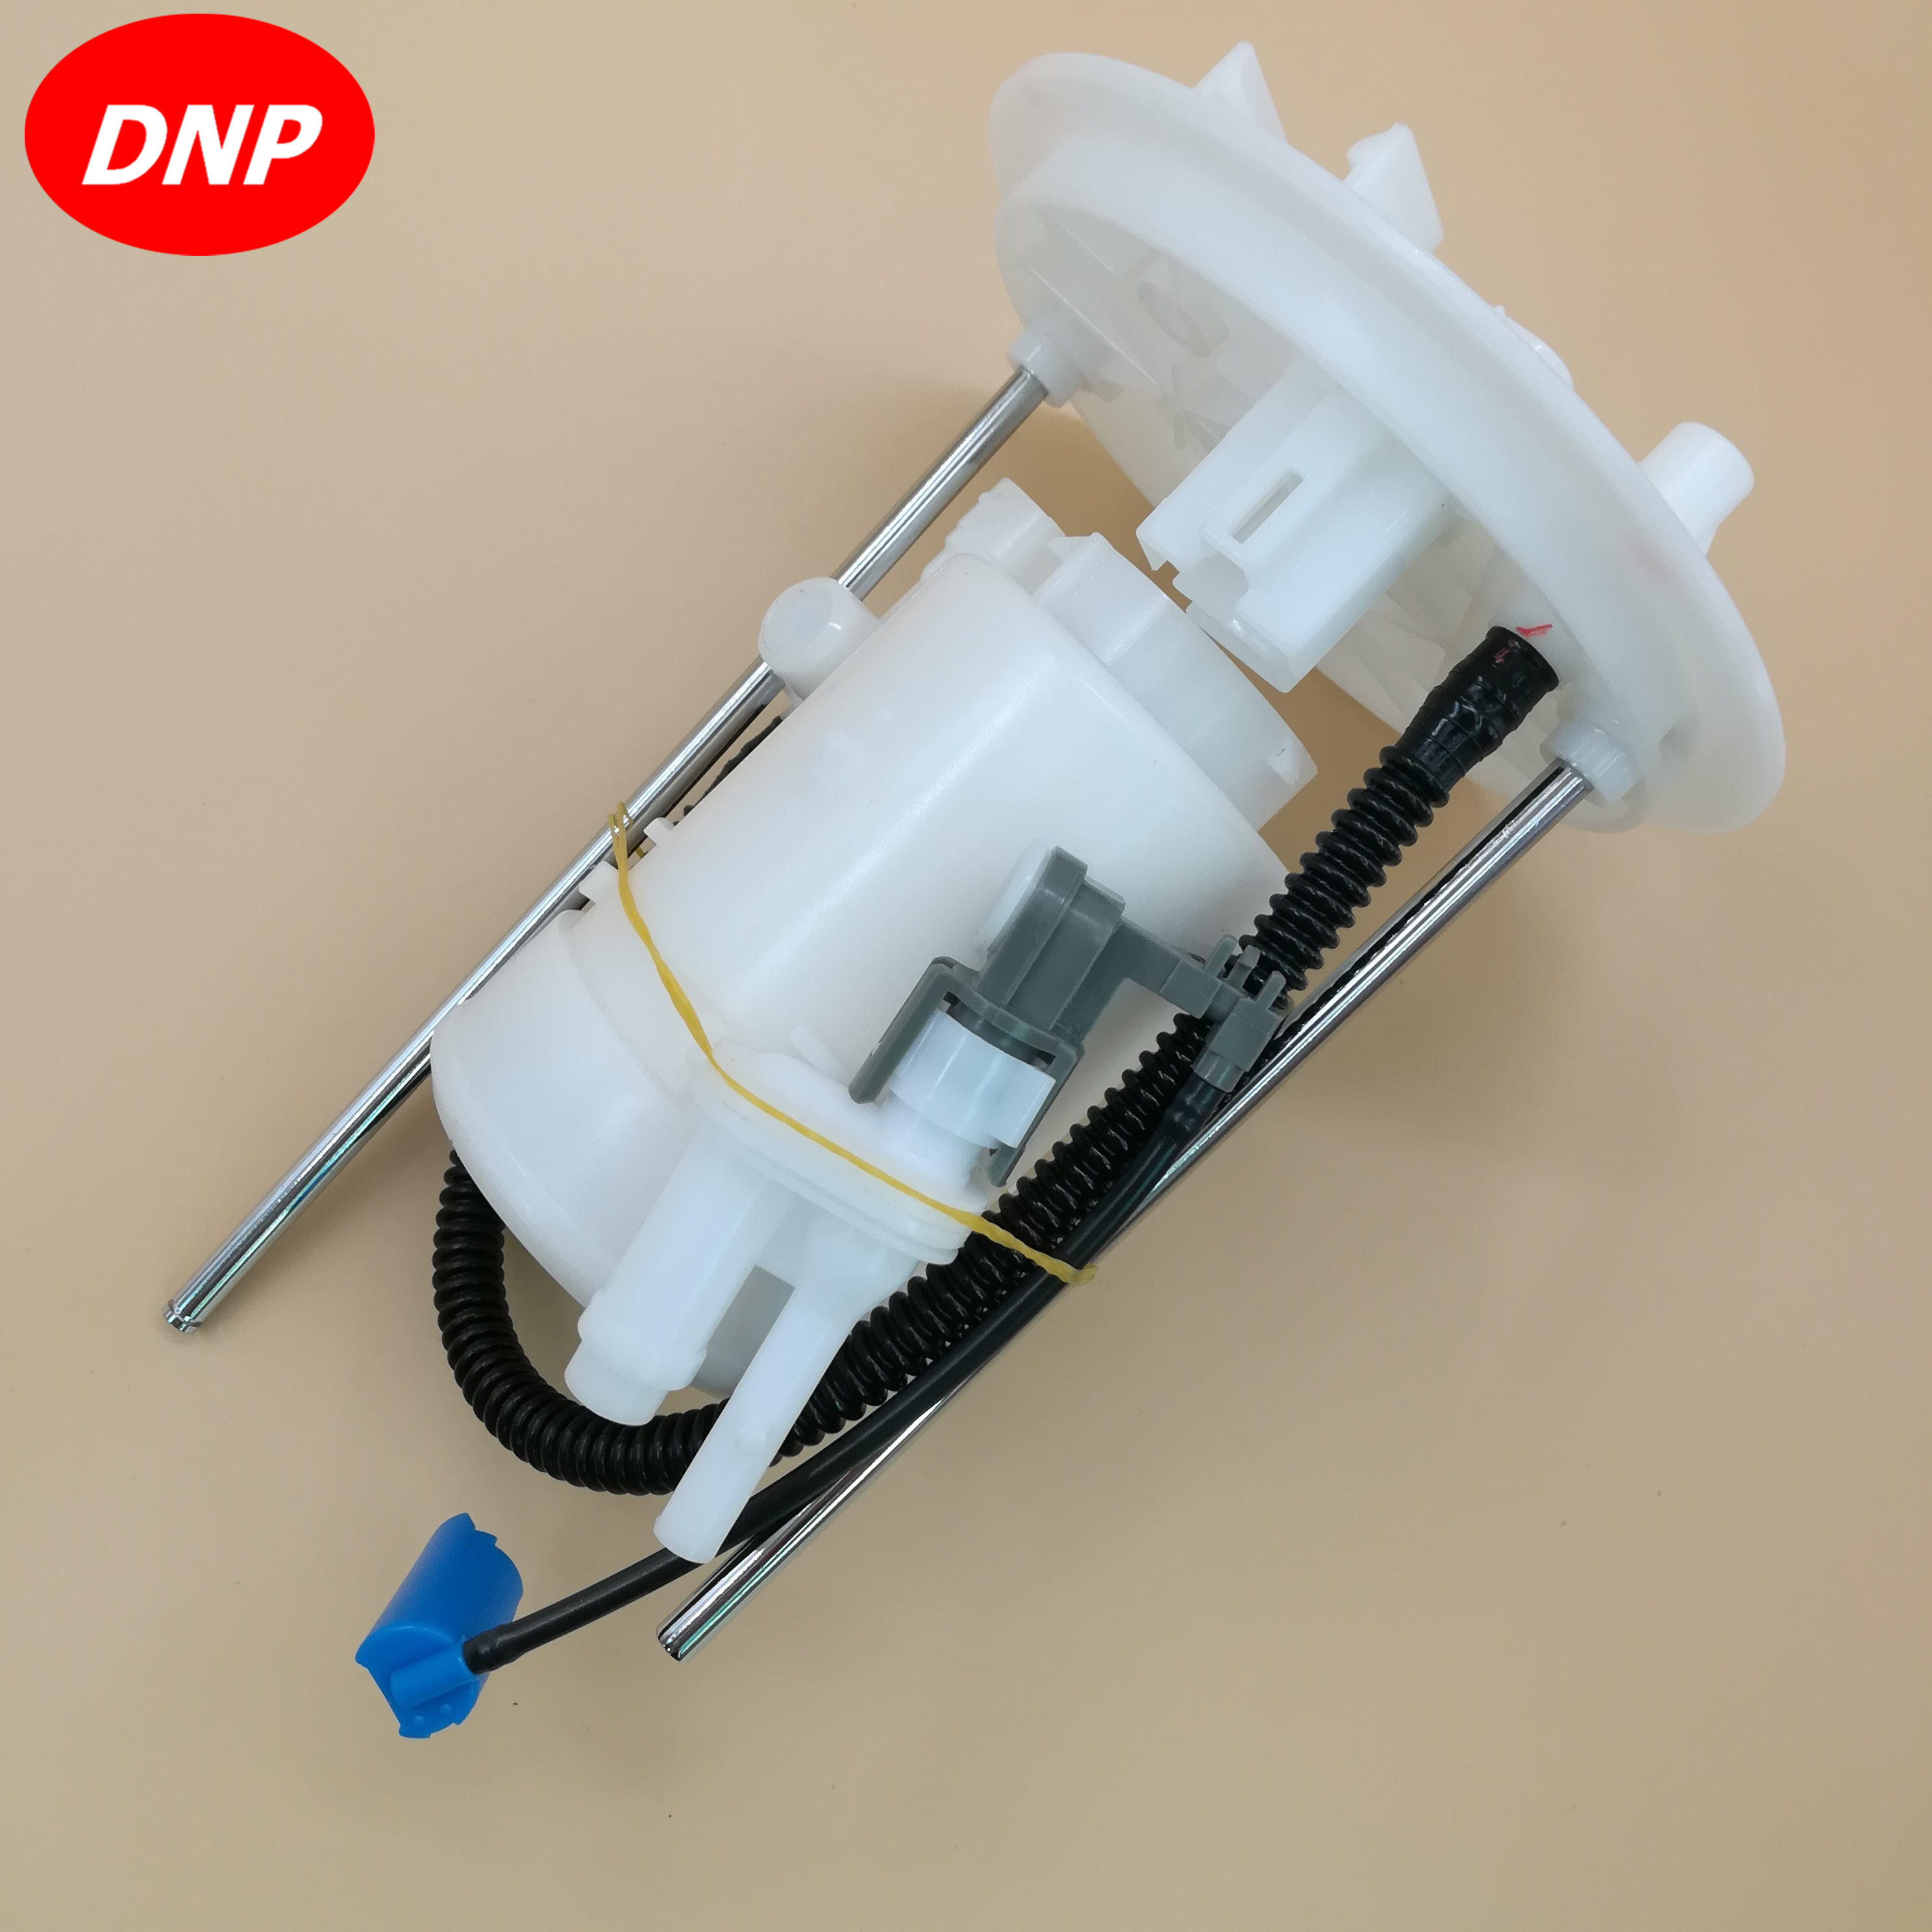 DNP Fuel filters fit for MITSUBISHI Outlander Sport ASX 2006- 1770A046